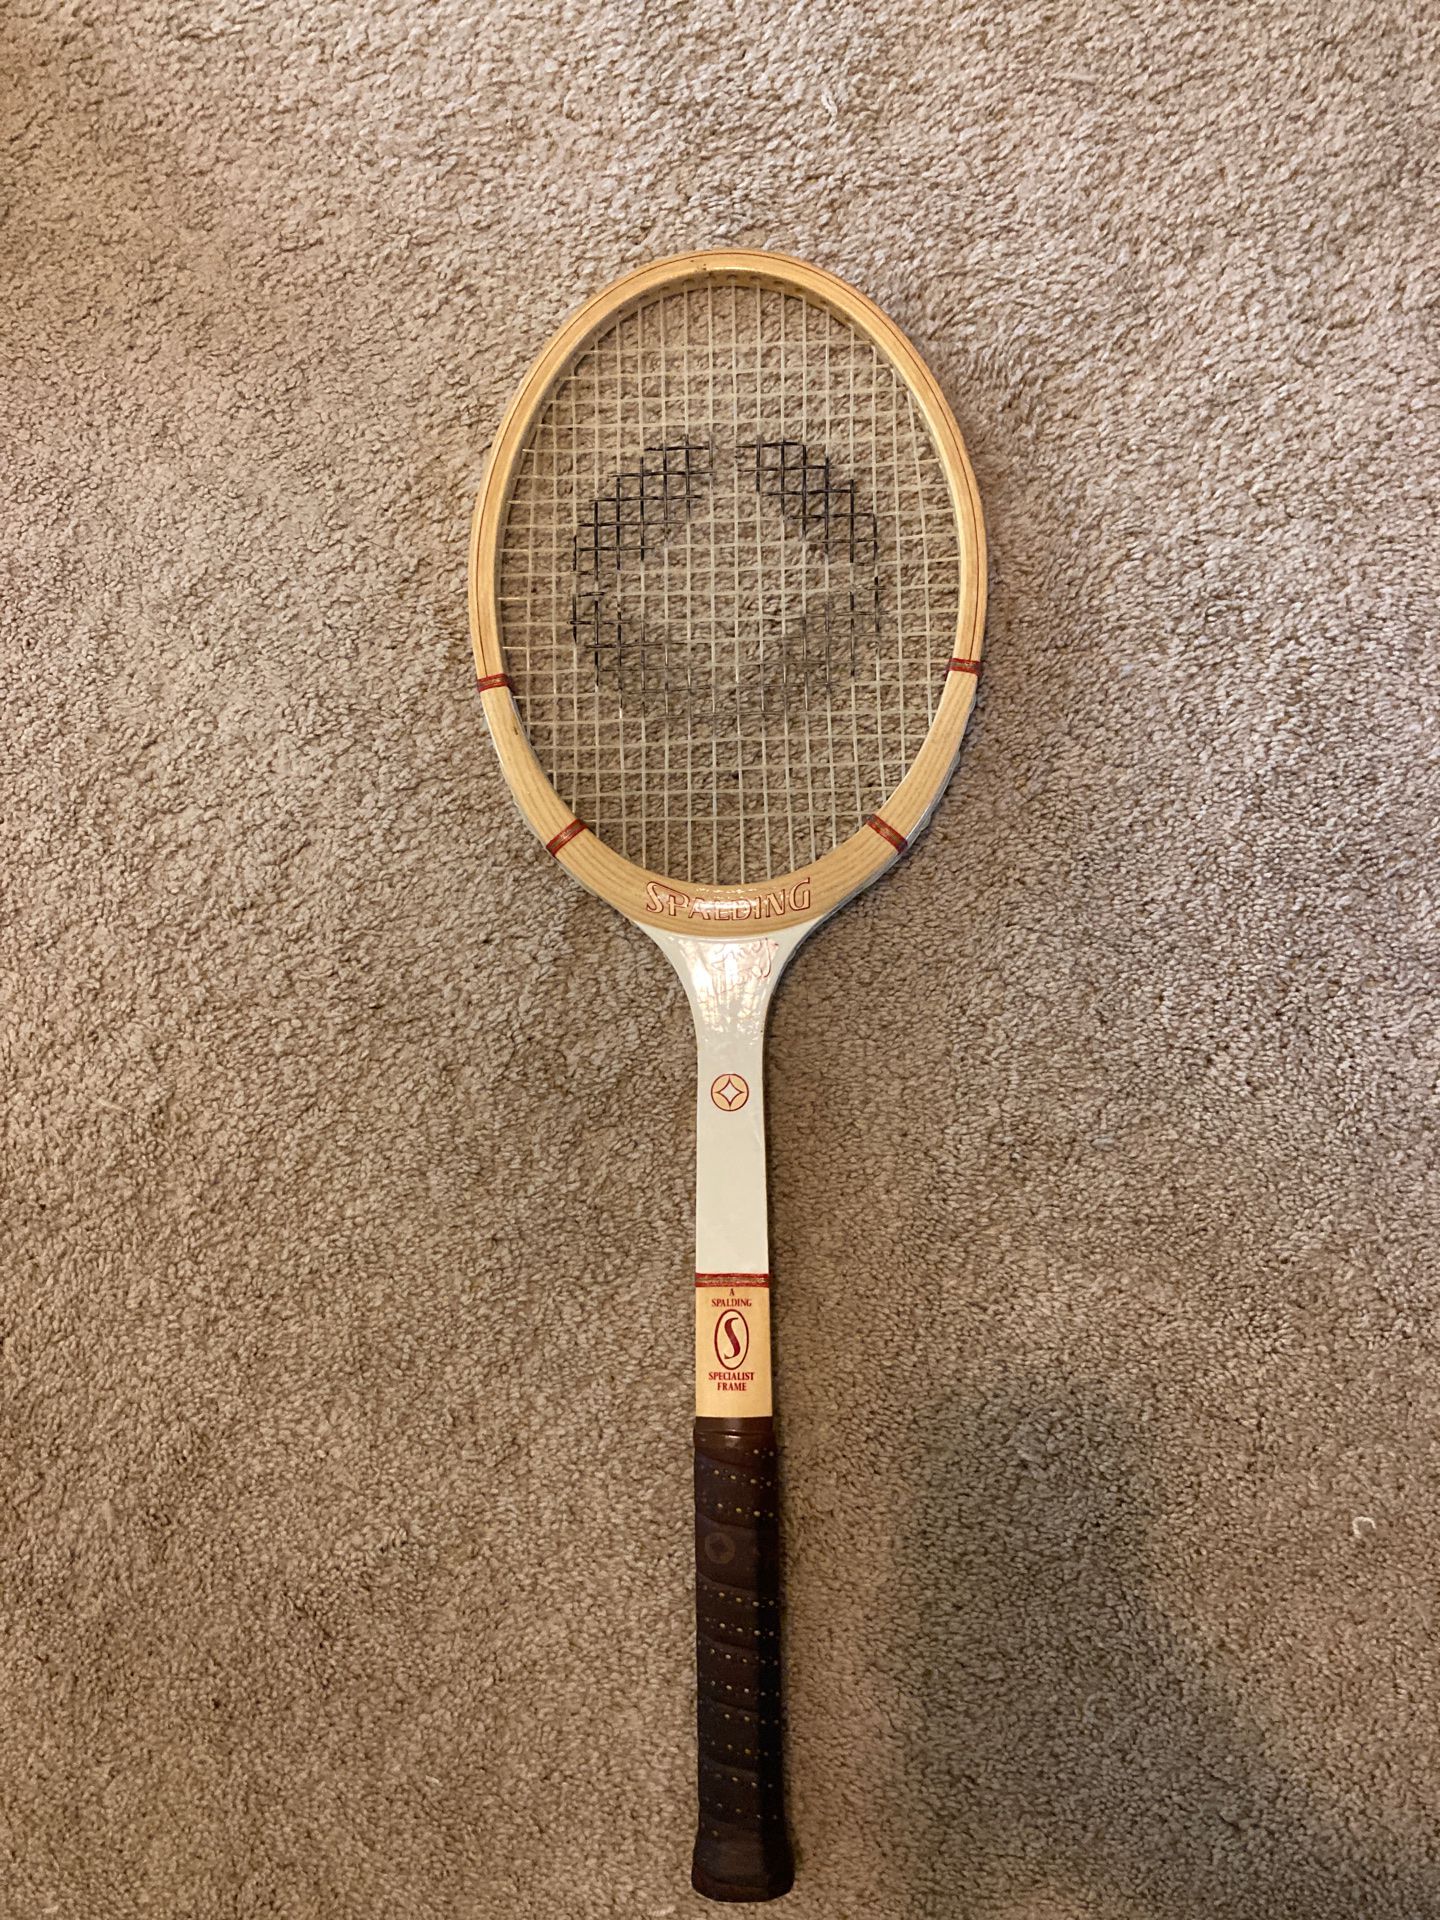 Spalding Tracy Austin Signature Vintage Wooden Tennis Racket